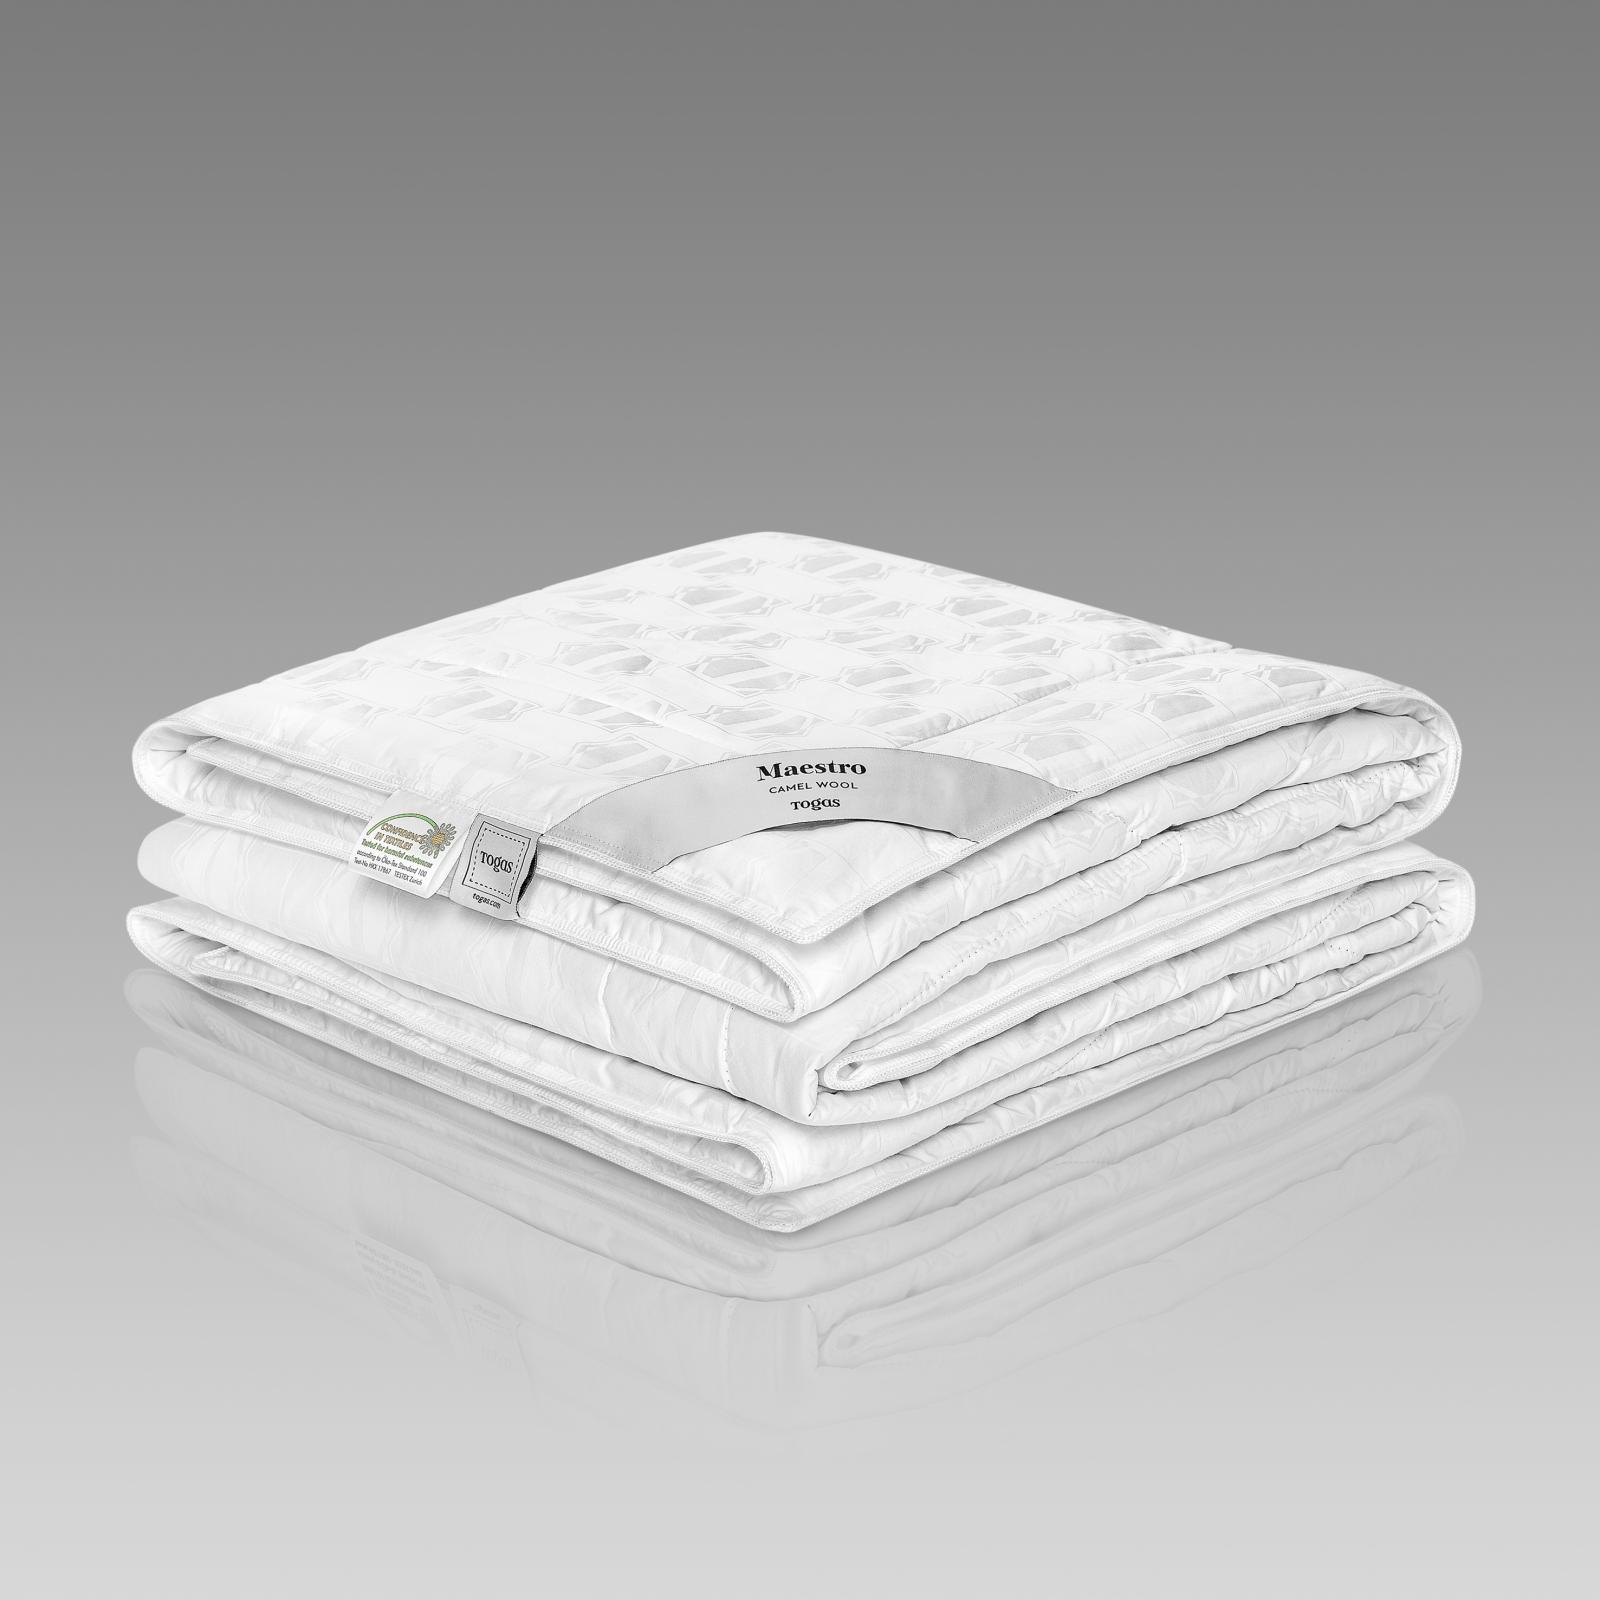 Одеяло Togas Маэстро белое 200х210 см (20.04.17.0089) одеяло togas кайзер белое 200х210 см